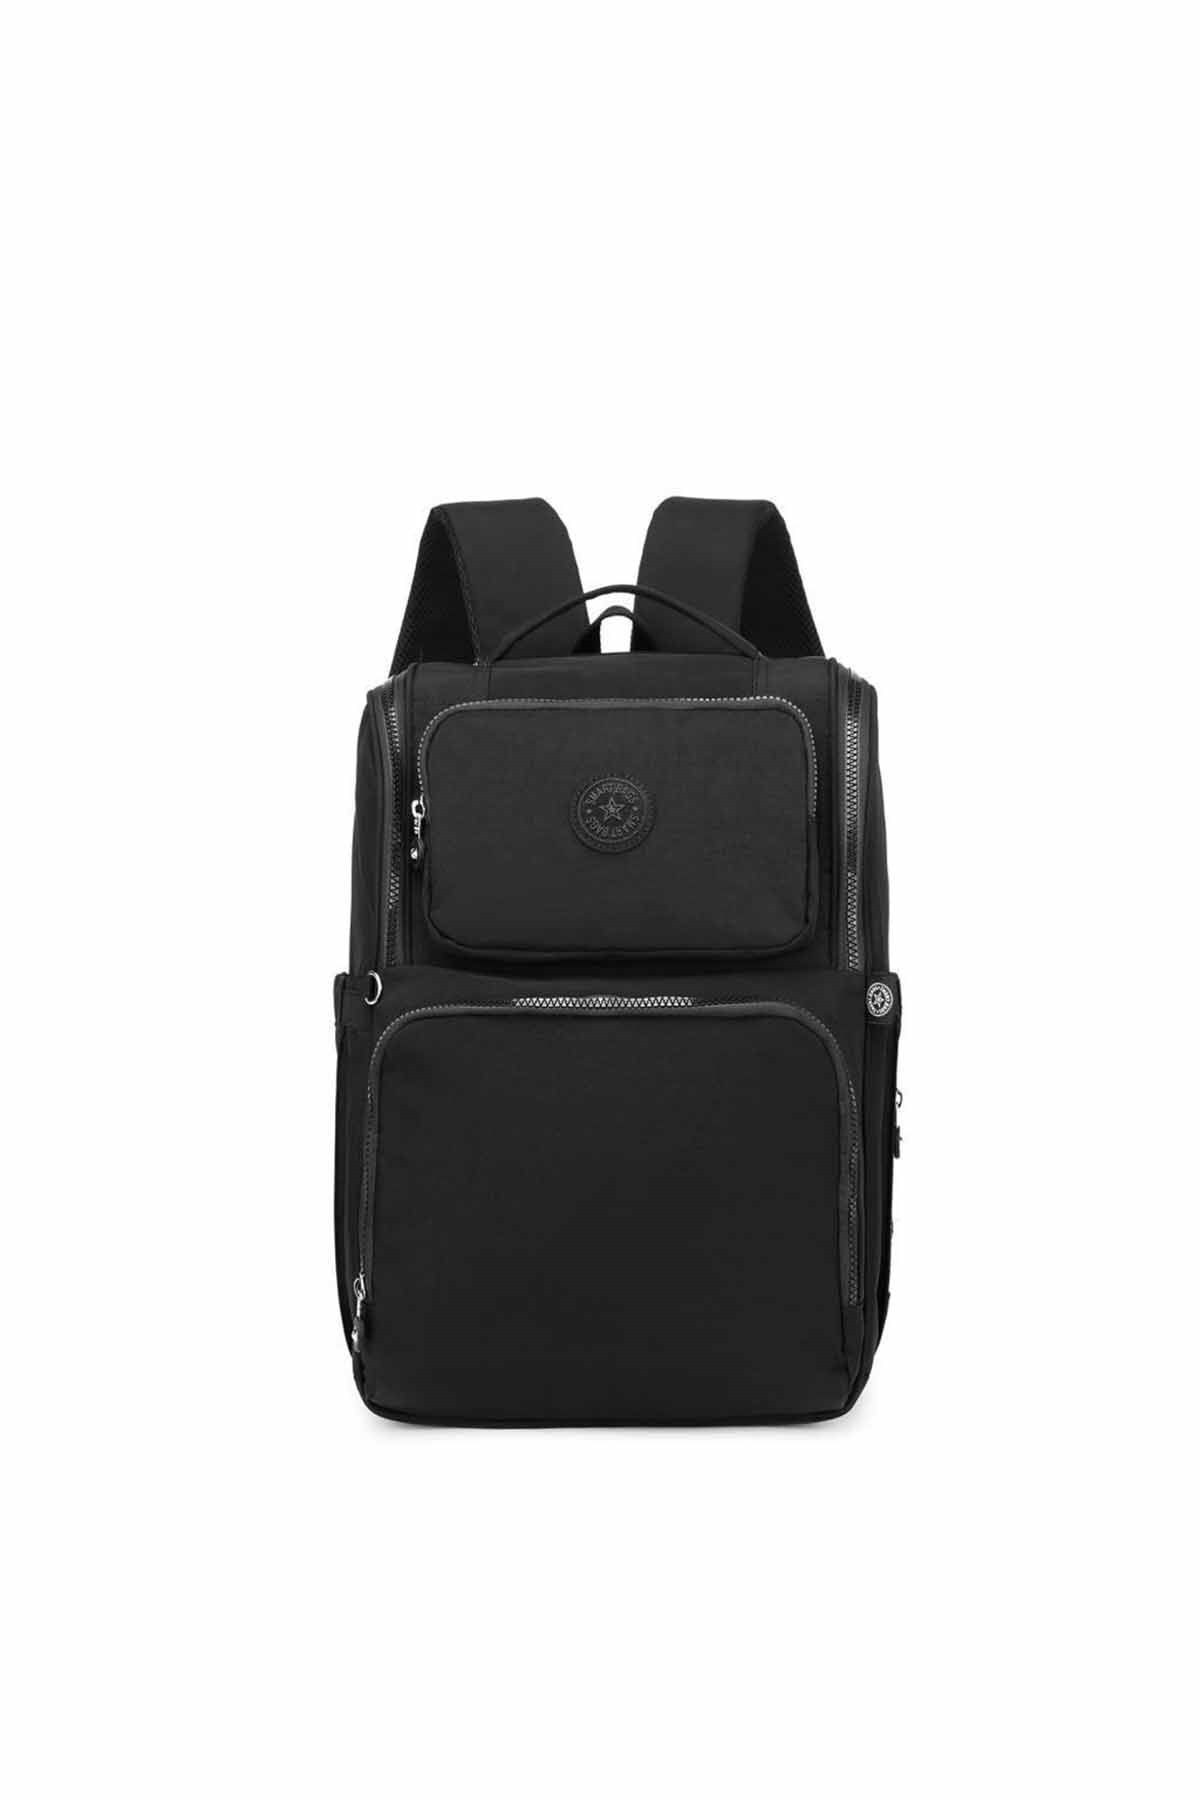 Smart Bags Smartbags Anne Bebek Sırt Çantası 2022-3000 Siyah